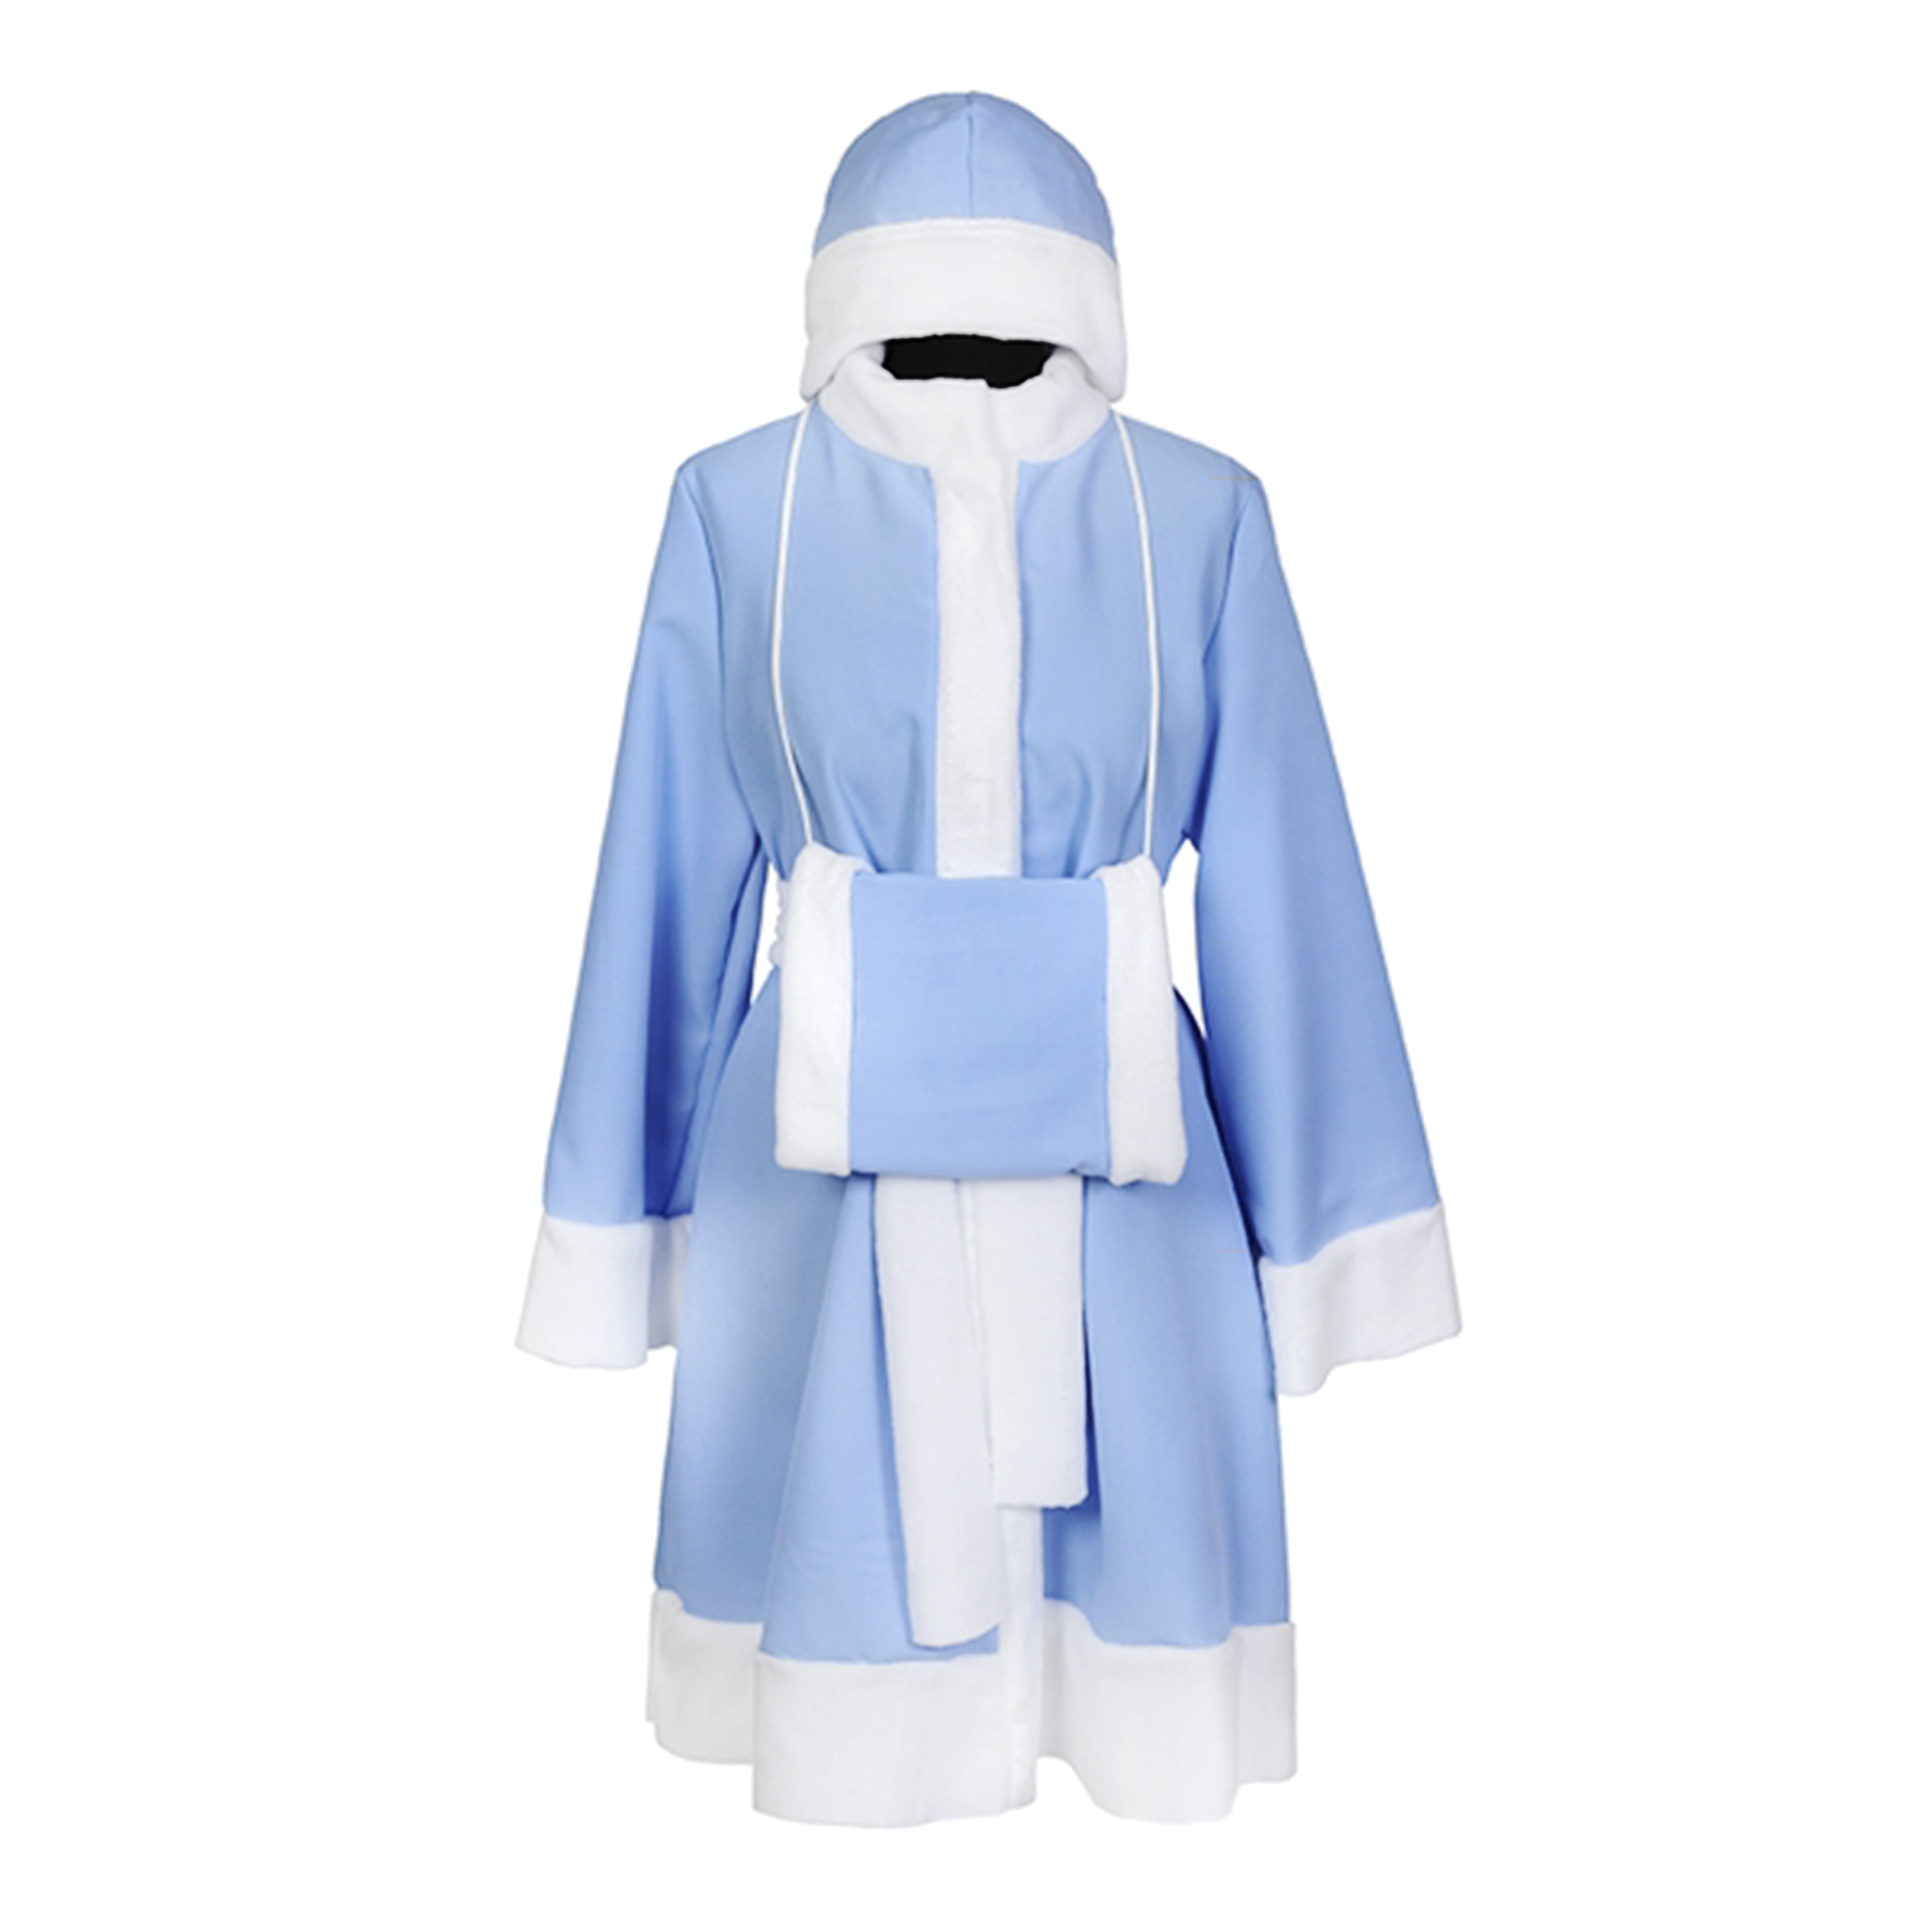 Костюм Артэ-грим Снегурочка синяя 46-48 костюм карнавальный детский артэ грим снегурочка 34 36